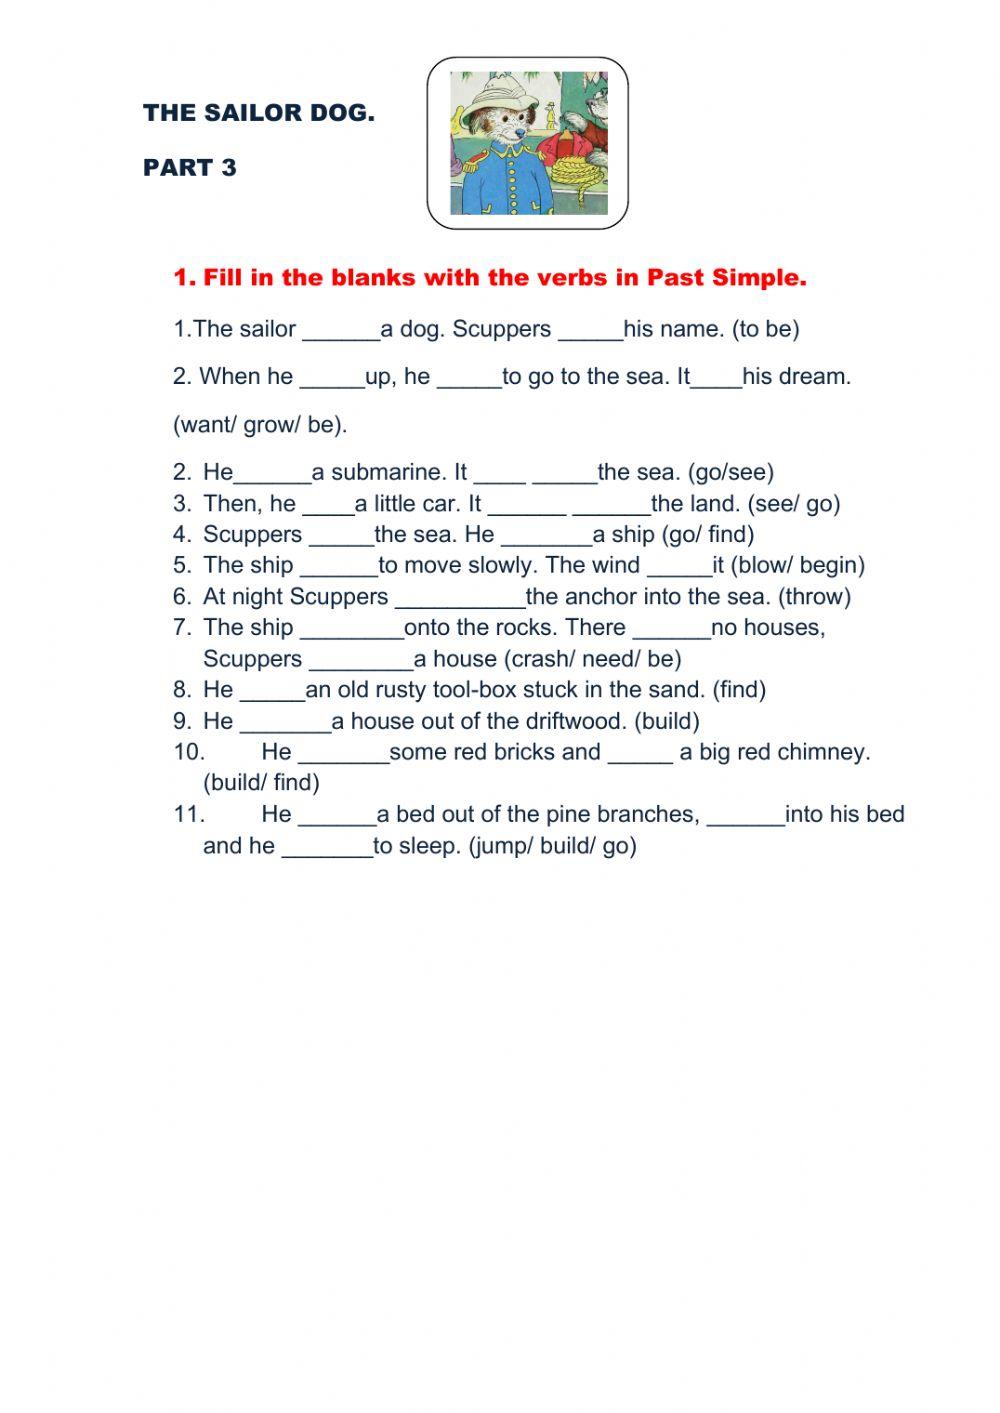 The Sailor Dog book based activity worksheet